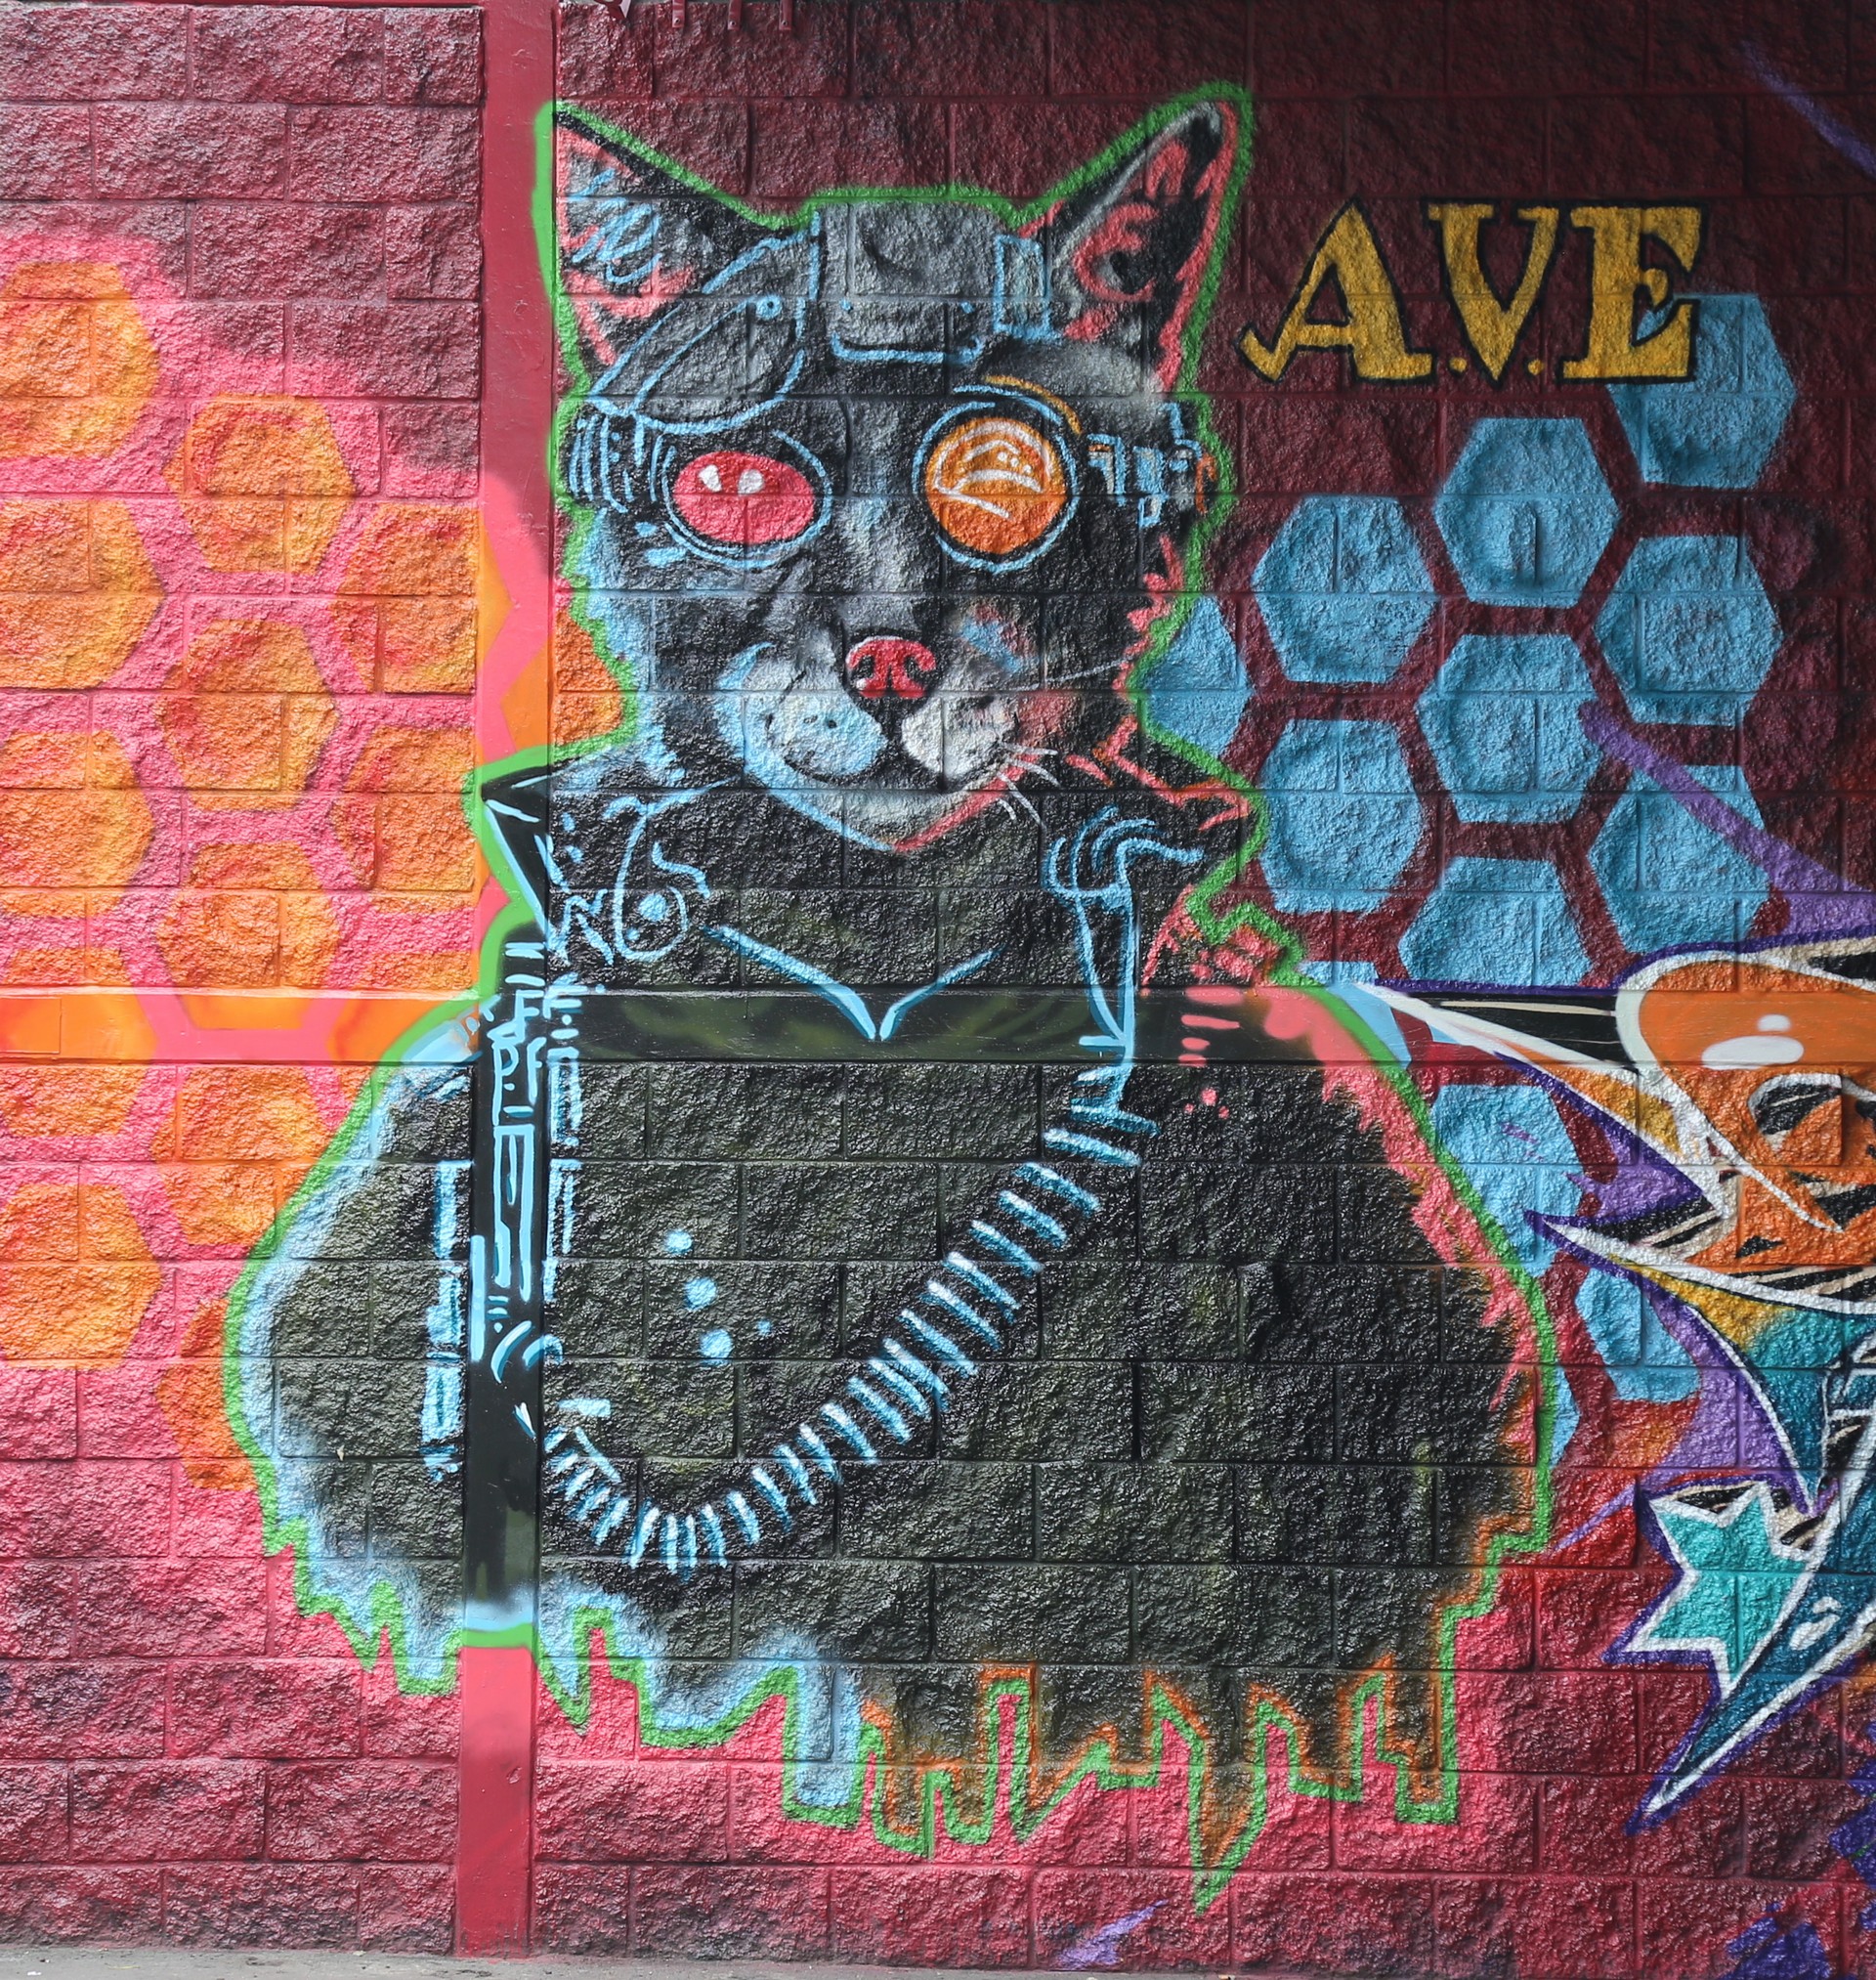 Obra Cyber Cat de A.V.E